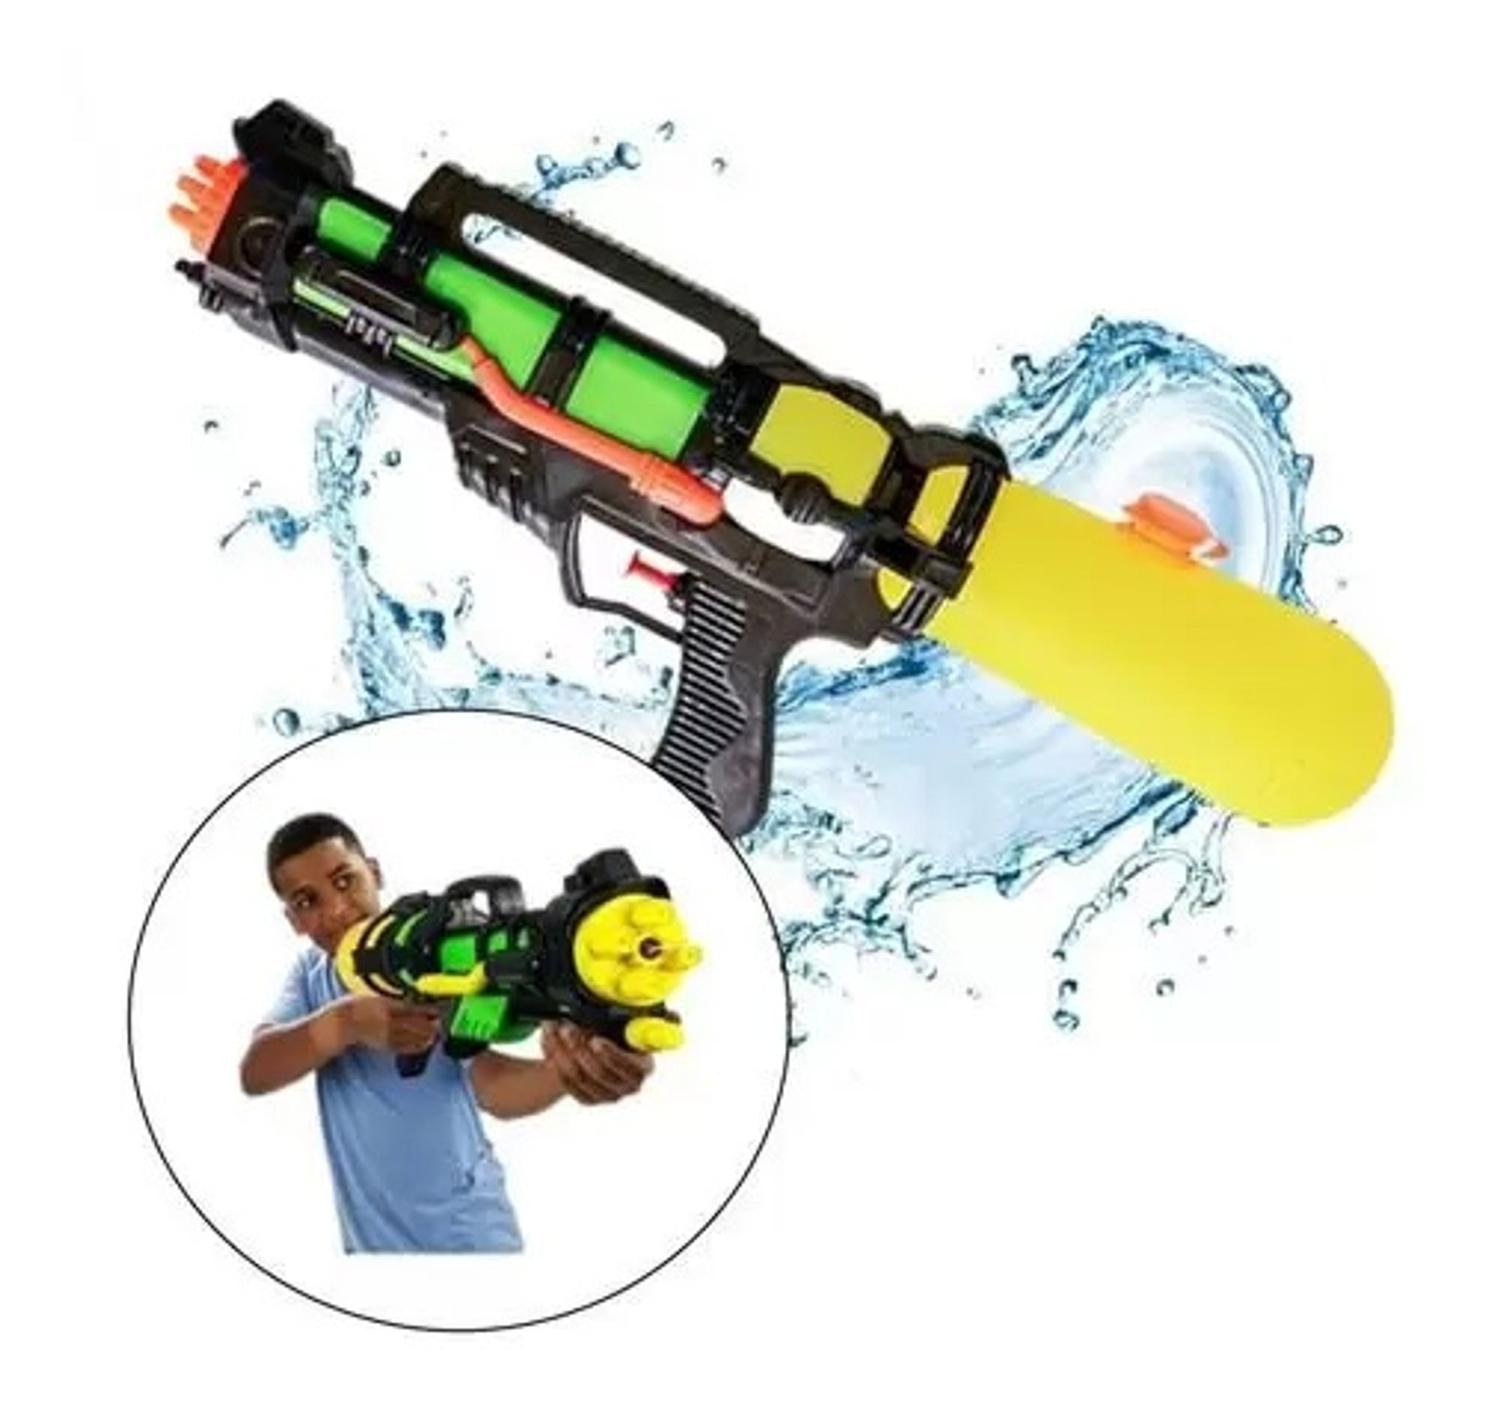 Pistola Arma Grande Water Gun Lança Água Brinquedo 53cm - Lançadores de Água  - Magazine Luiza